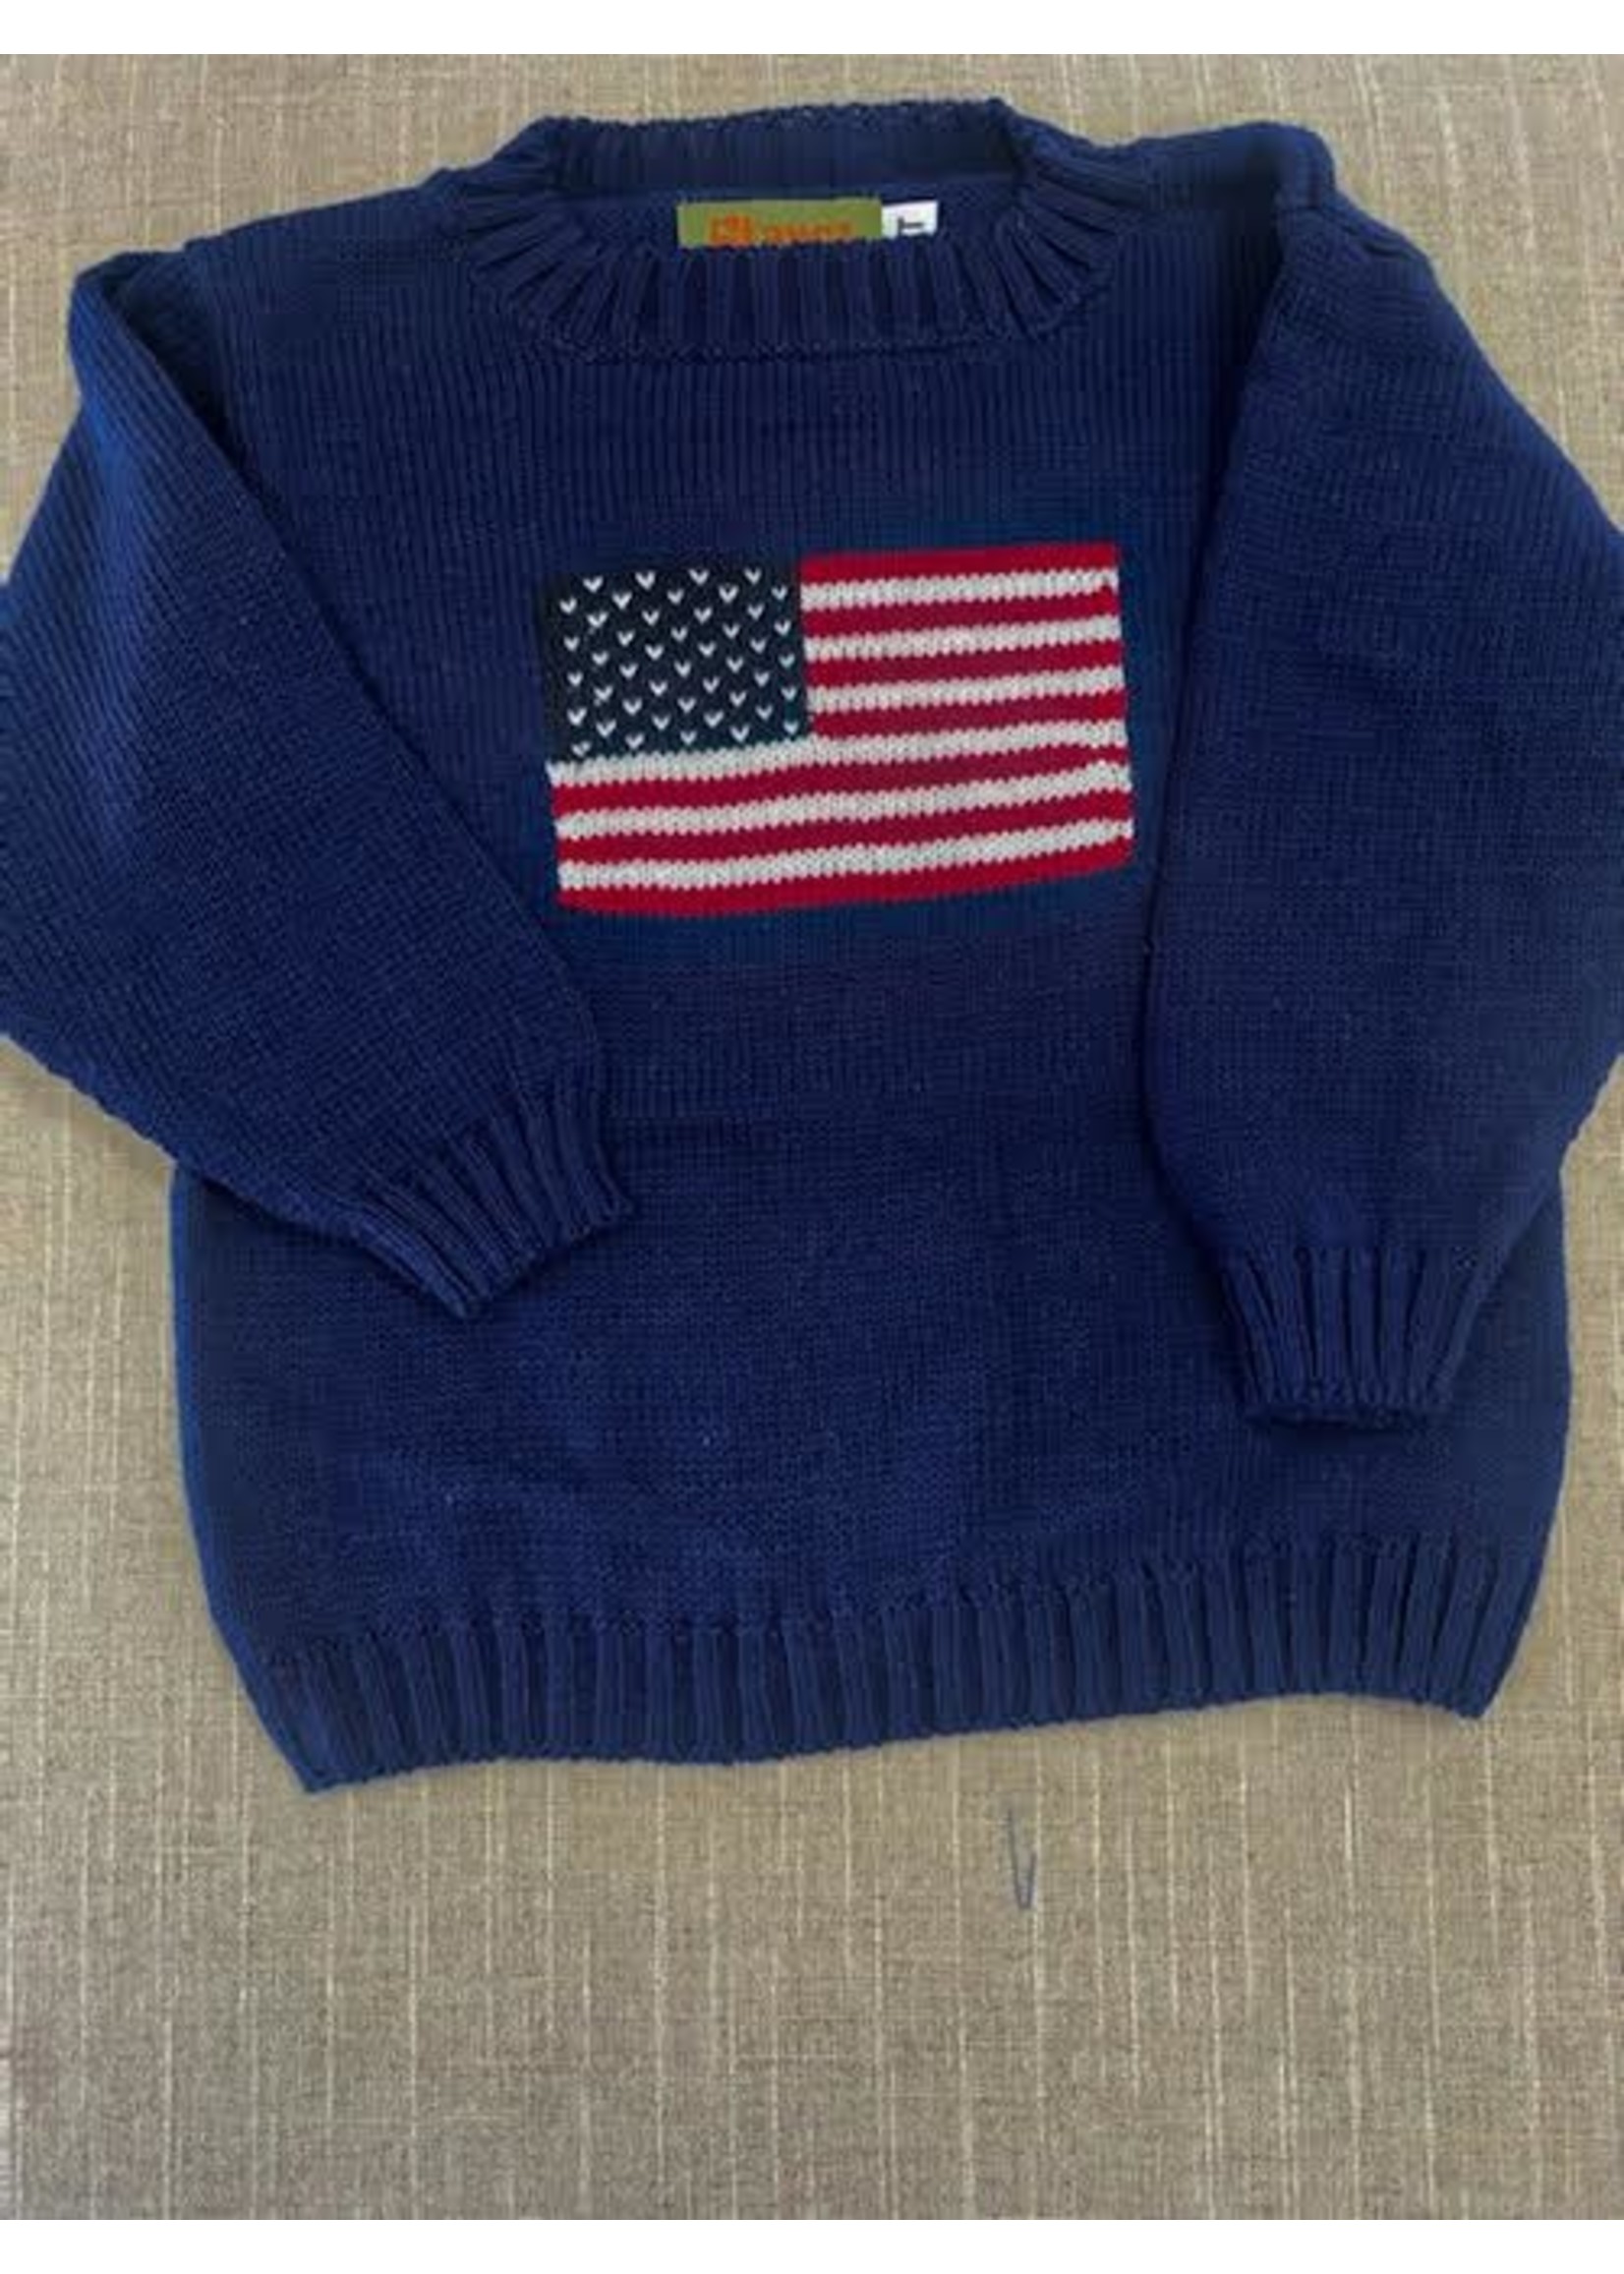 Luigi Luigi Crewneck Sweater  - American Flag